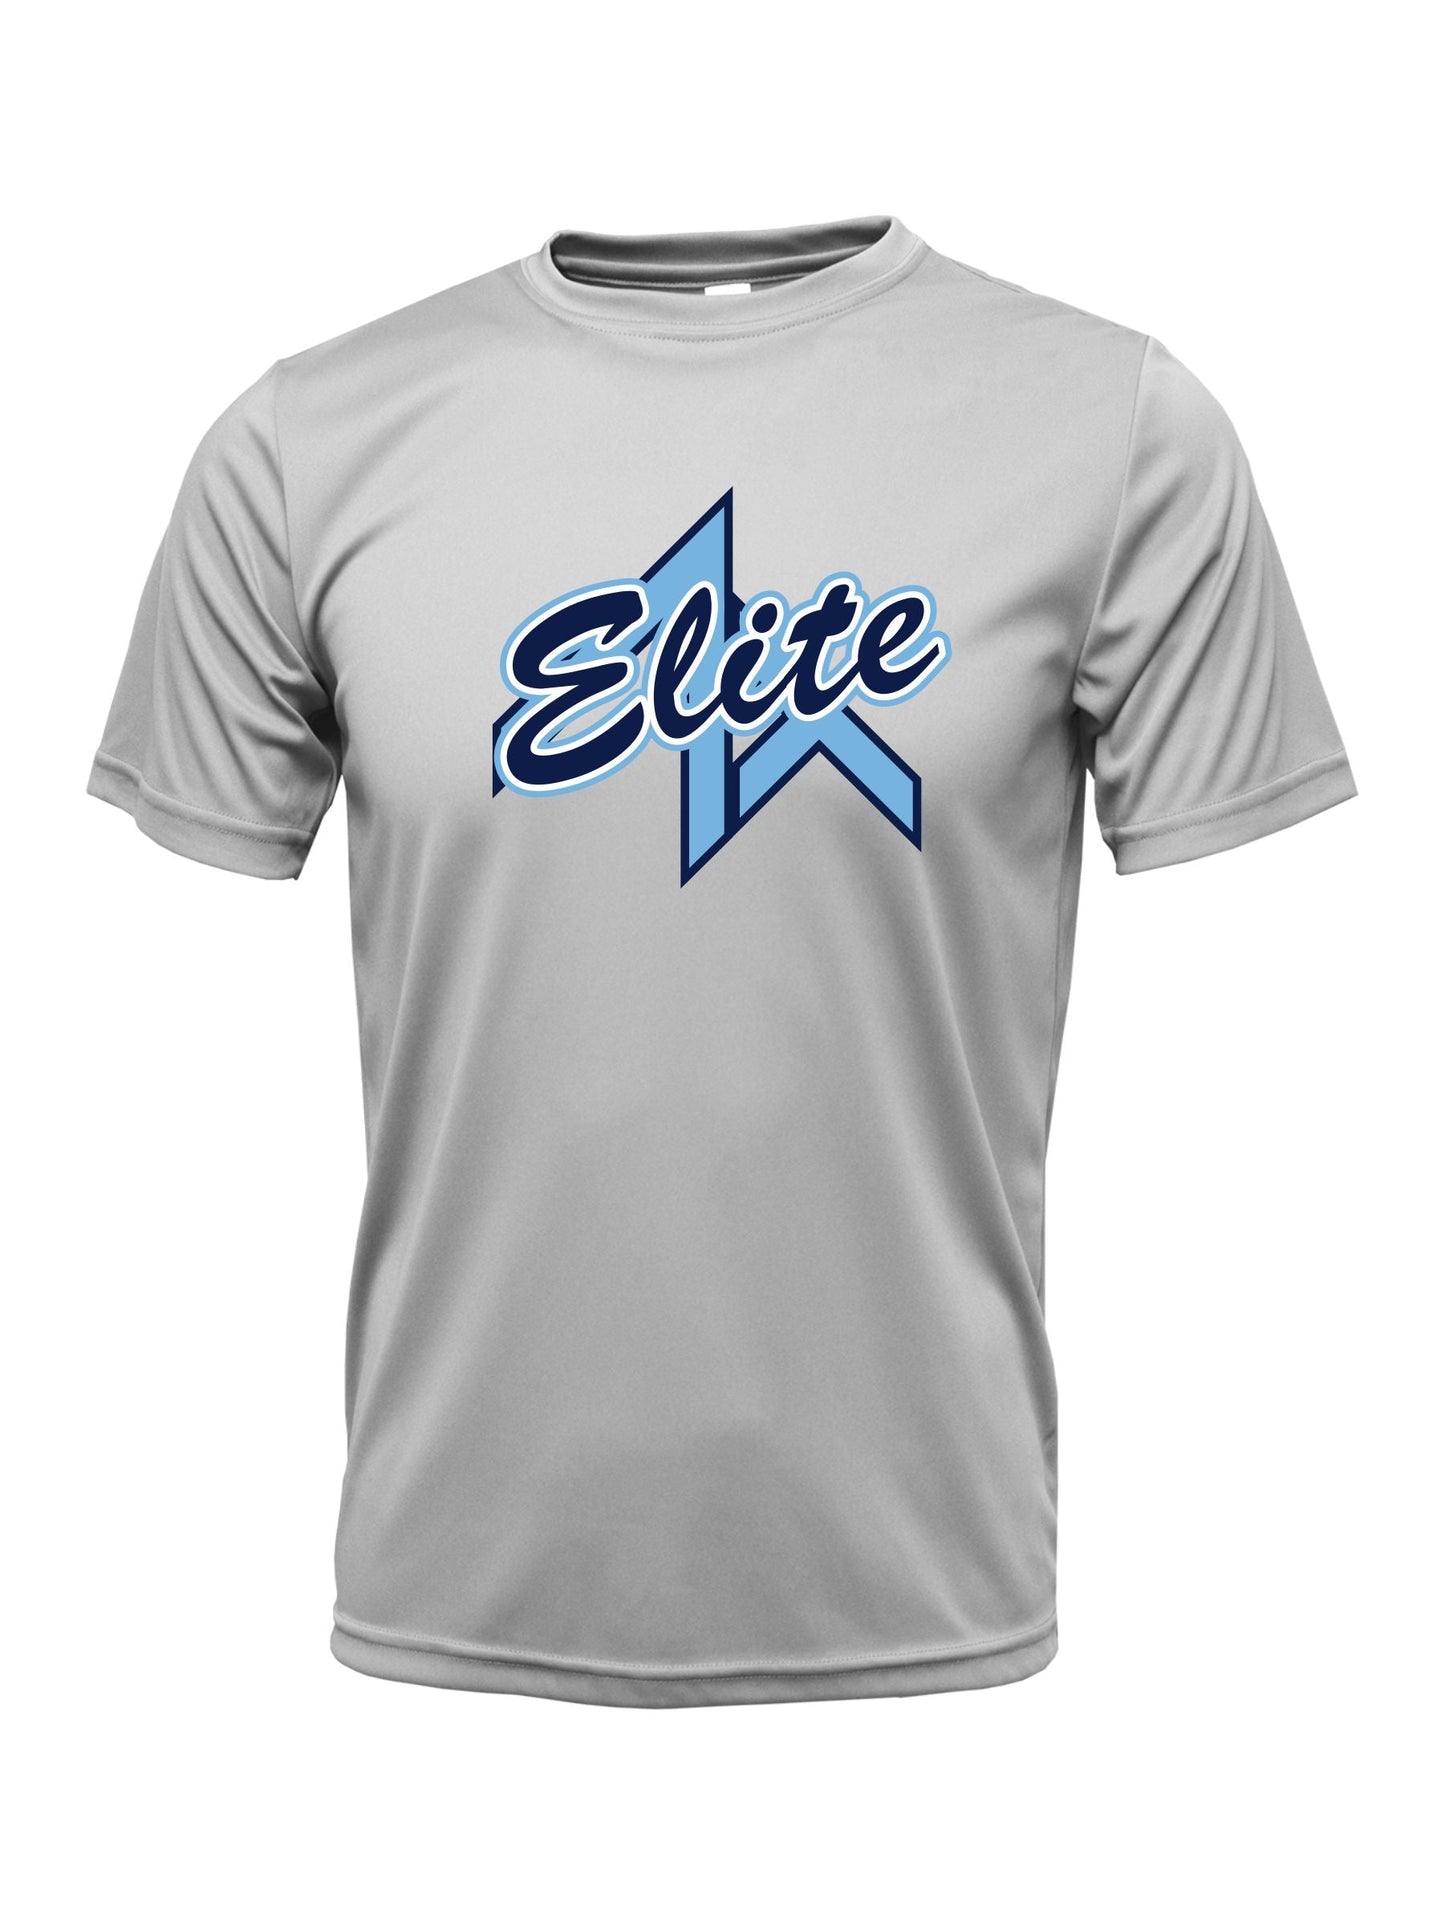 Short Sleeve "ZT ELITE" Cotton T-shirt